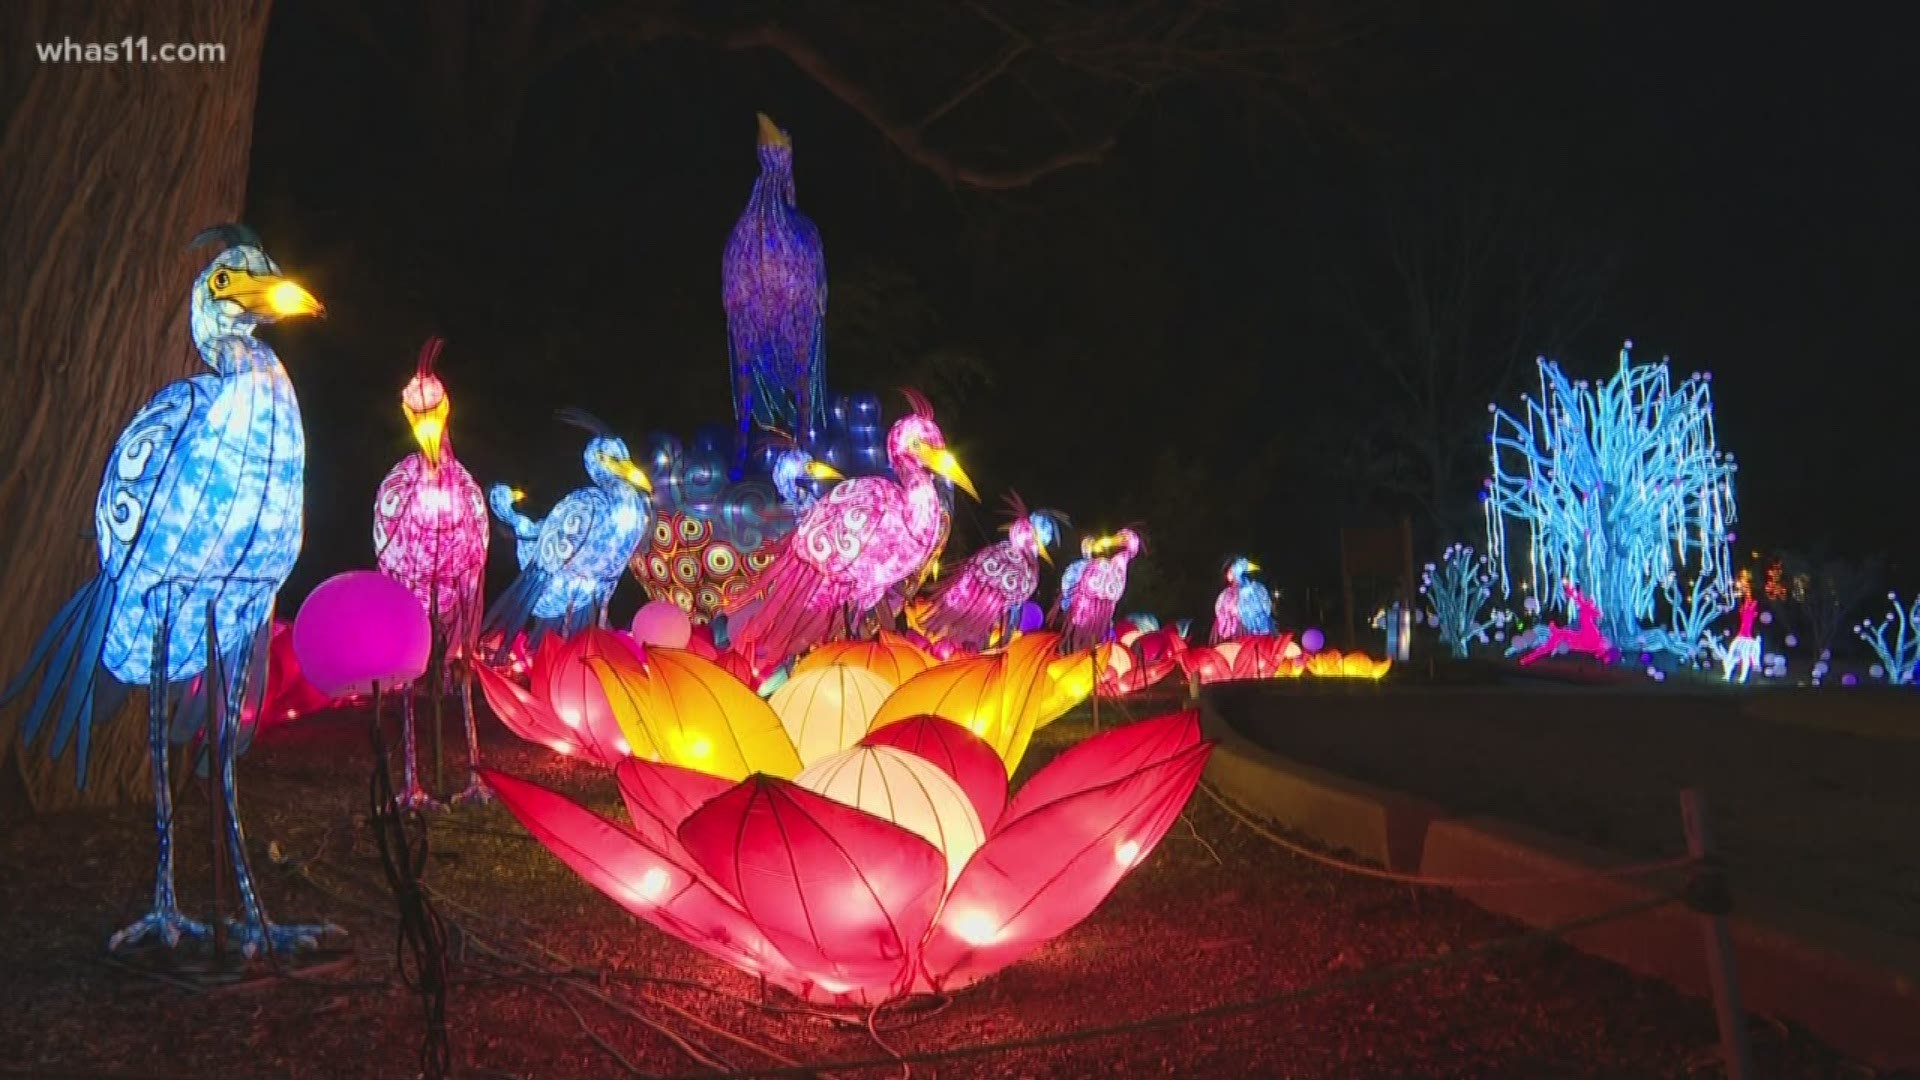 Wild Lights Lantern festival begins at Louisville Zoo